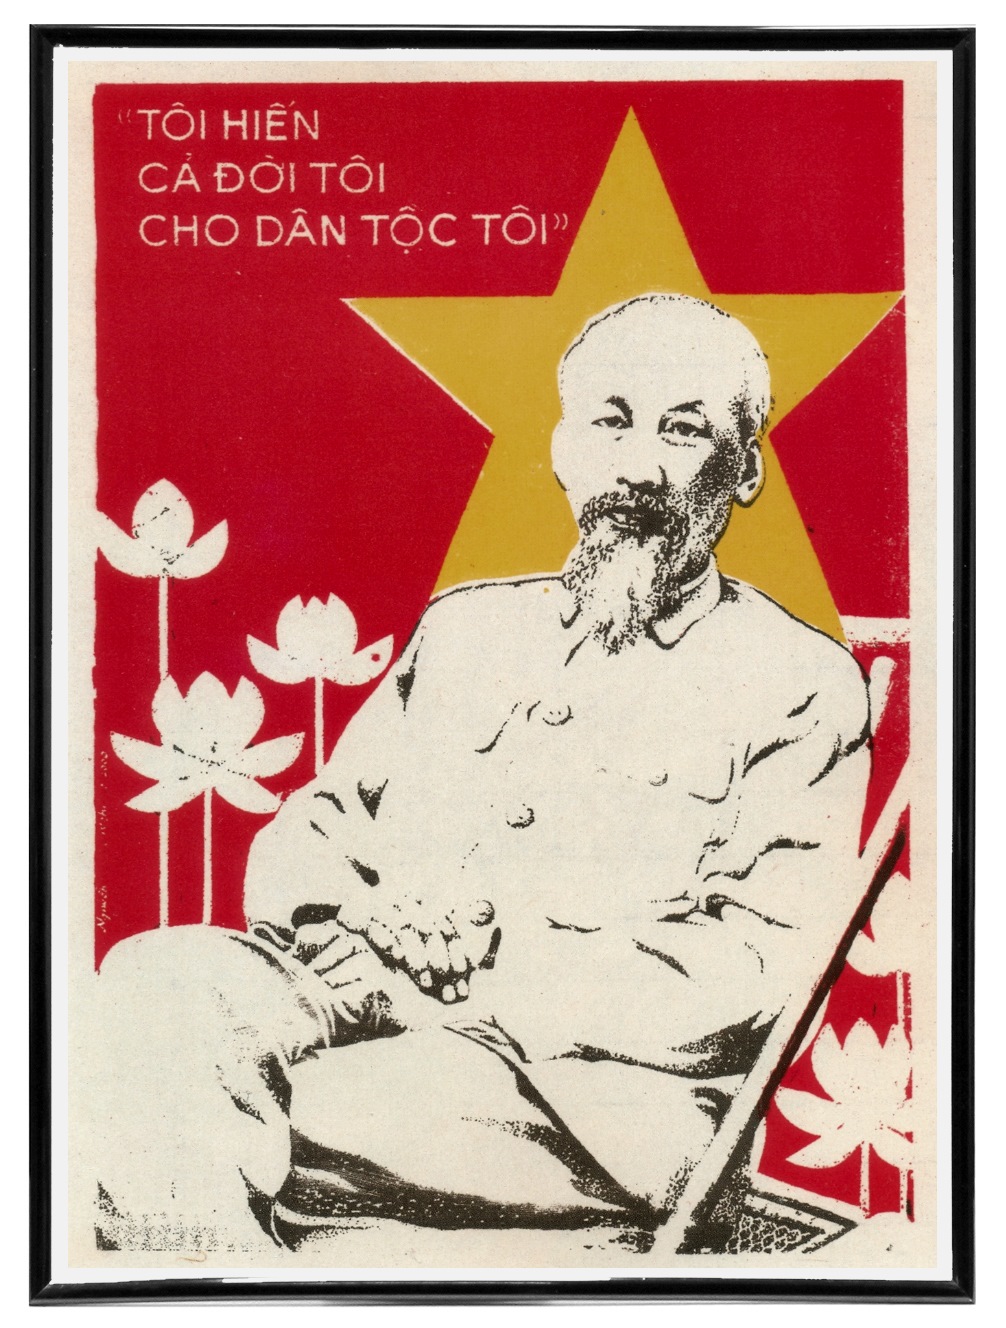 Vietnam Propaganda Posters - RetroGraphik